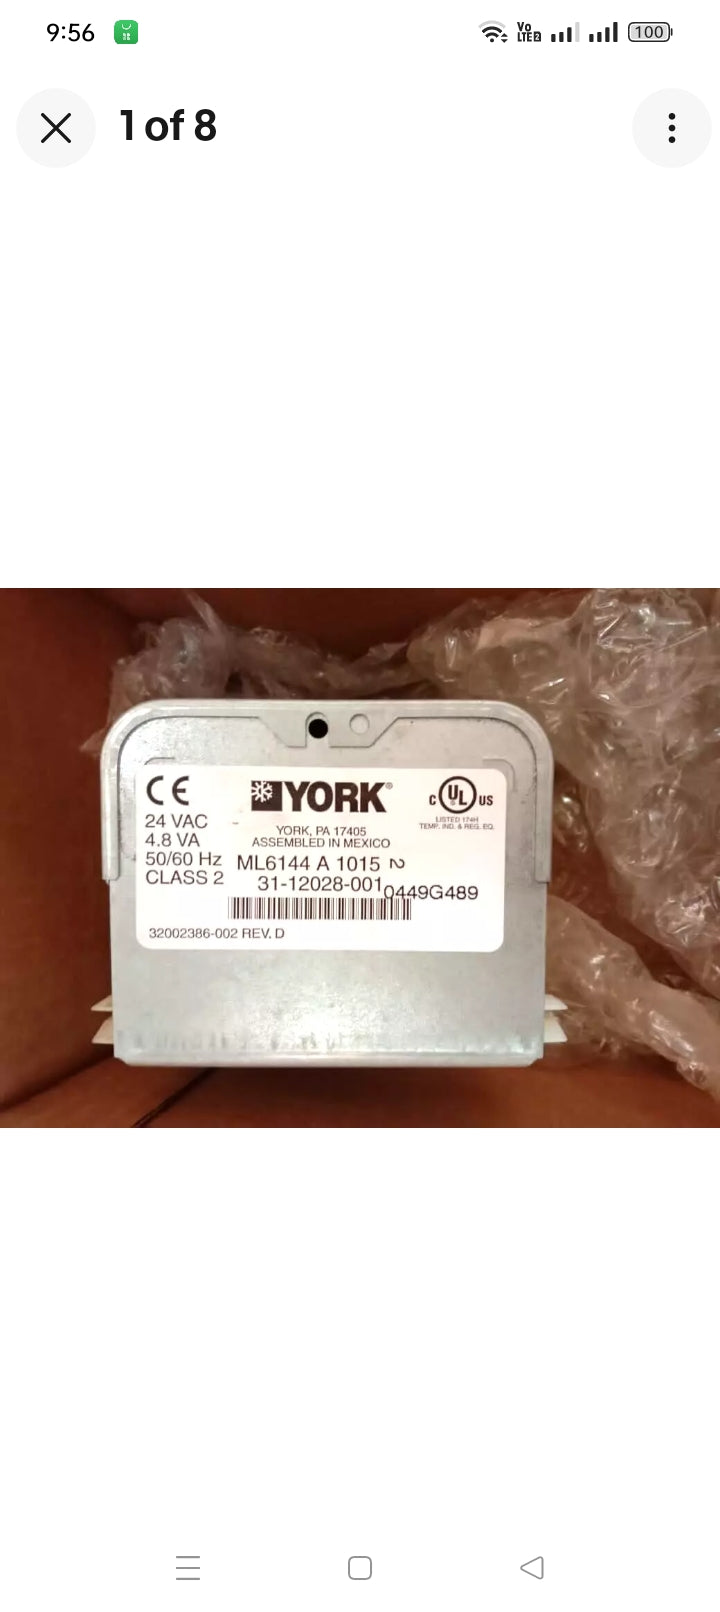 YORK ML6144A1015

Manufactured by YORK YORK GENUINE PARTS